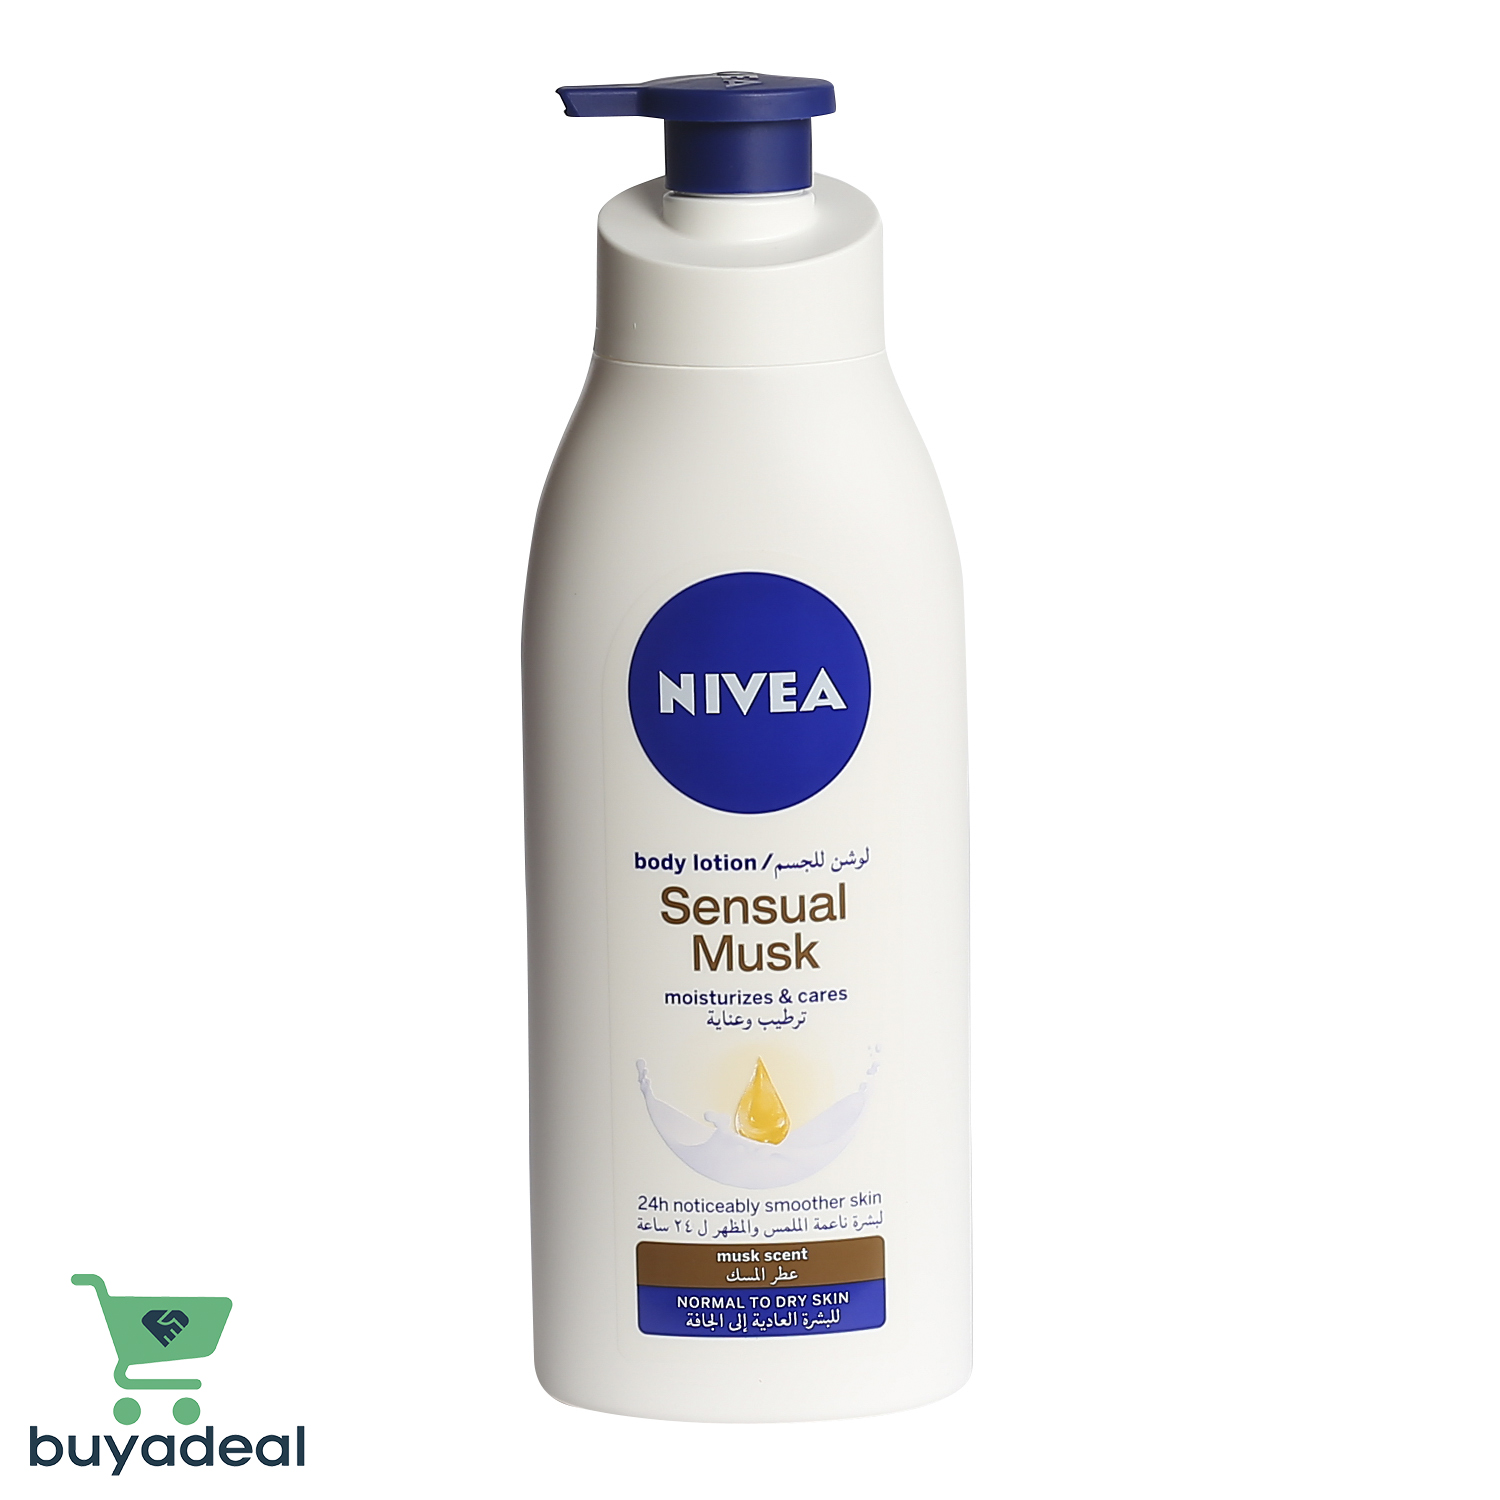 Buyadeal Product Nivea Sensual Musk normal to Dry Skin - 400ml